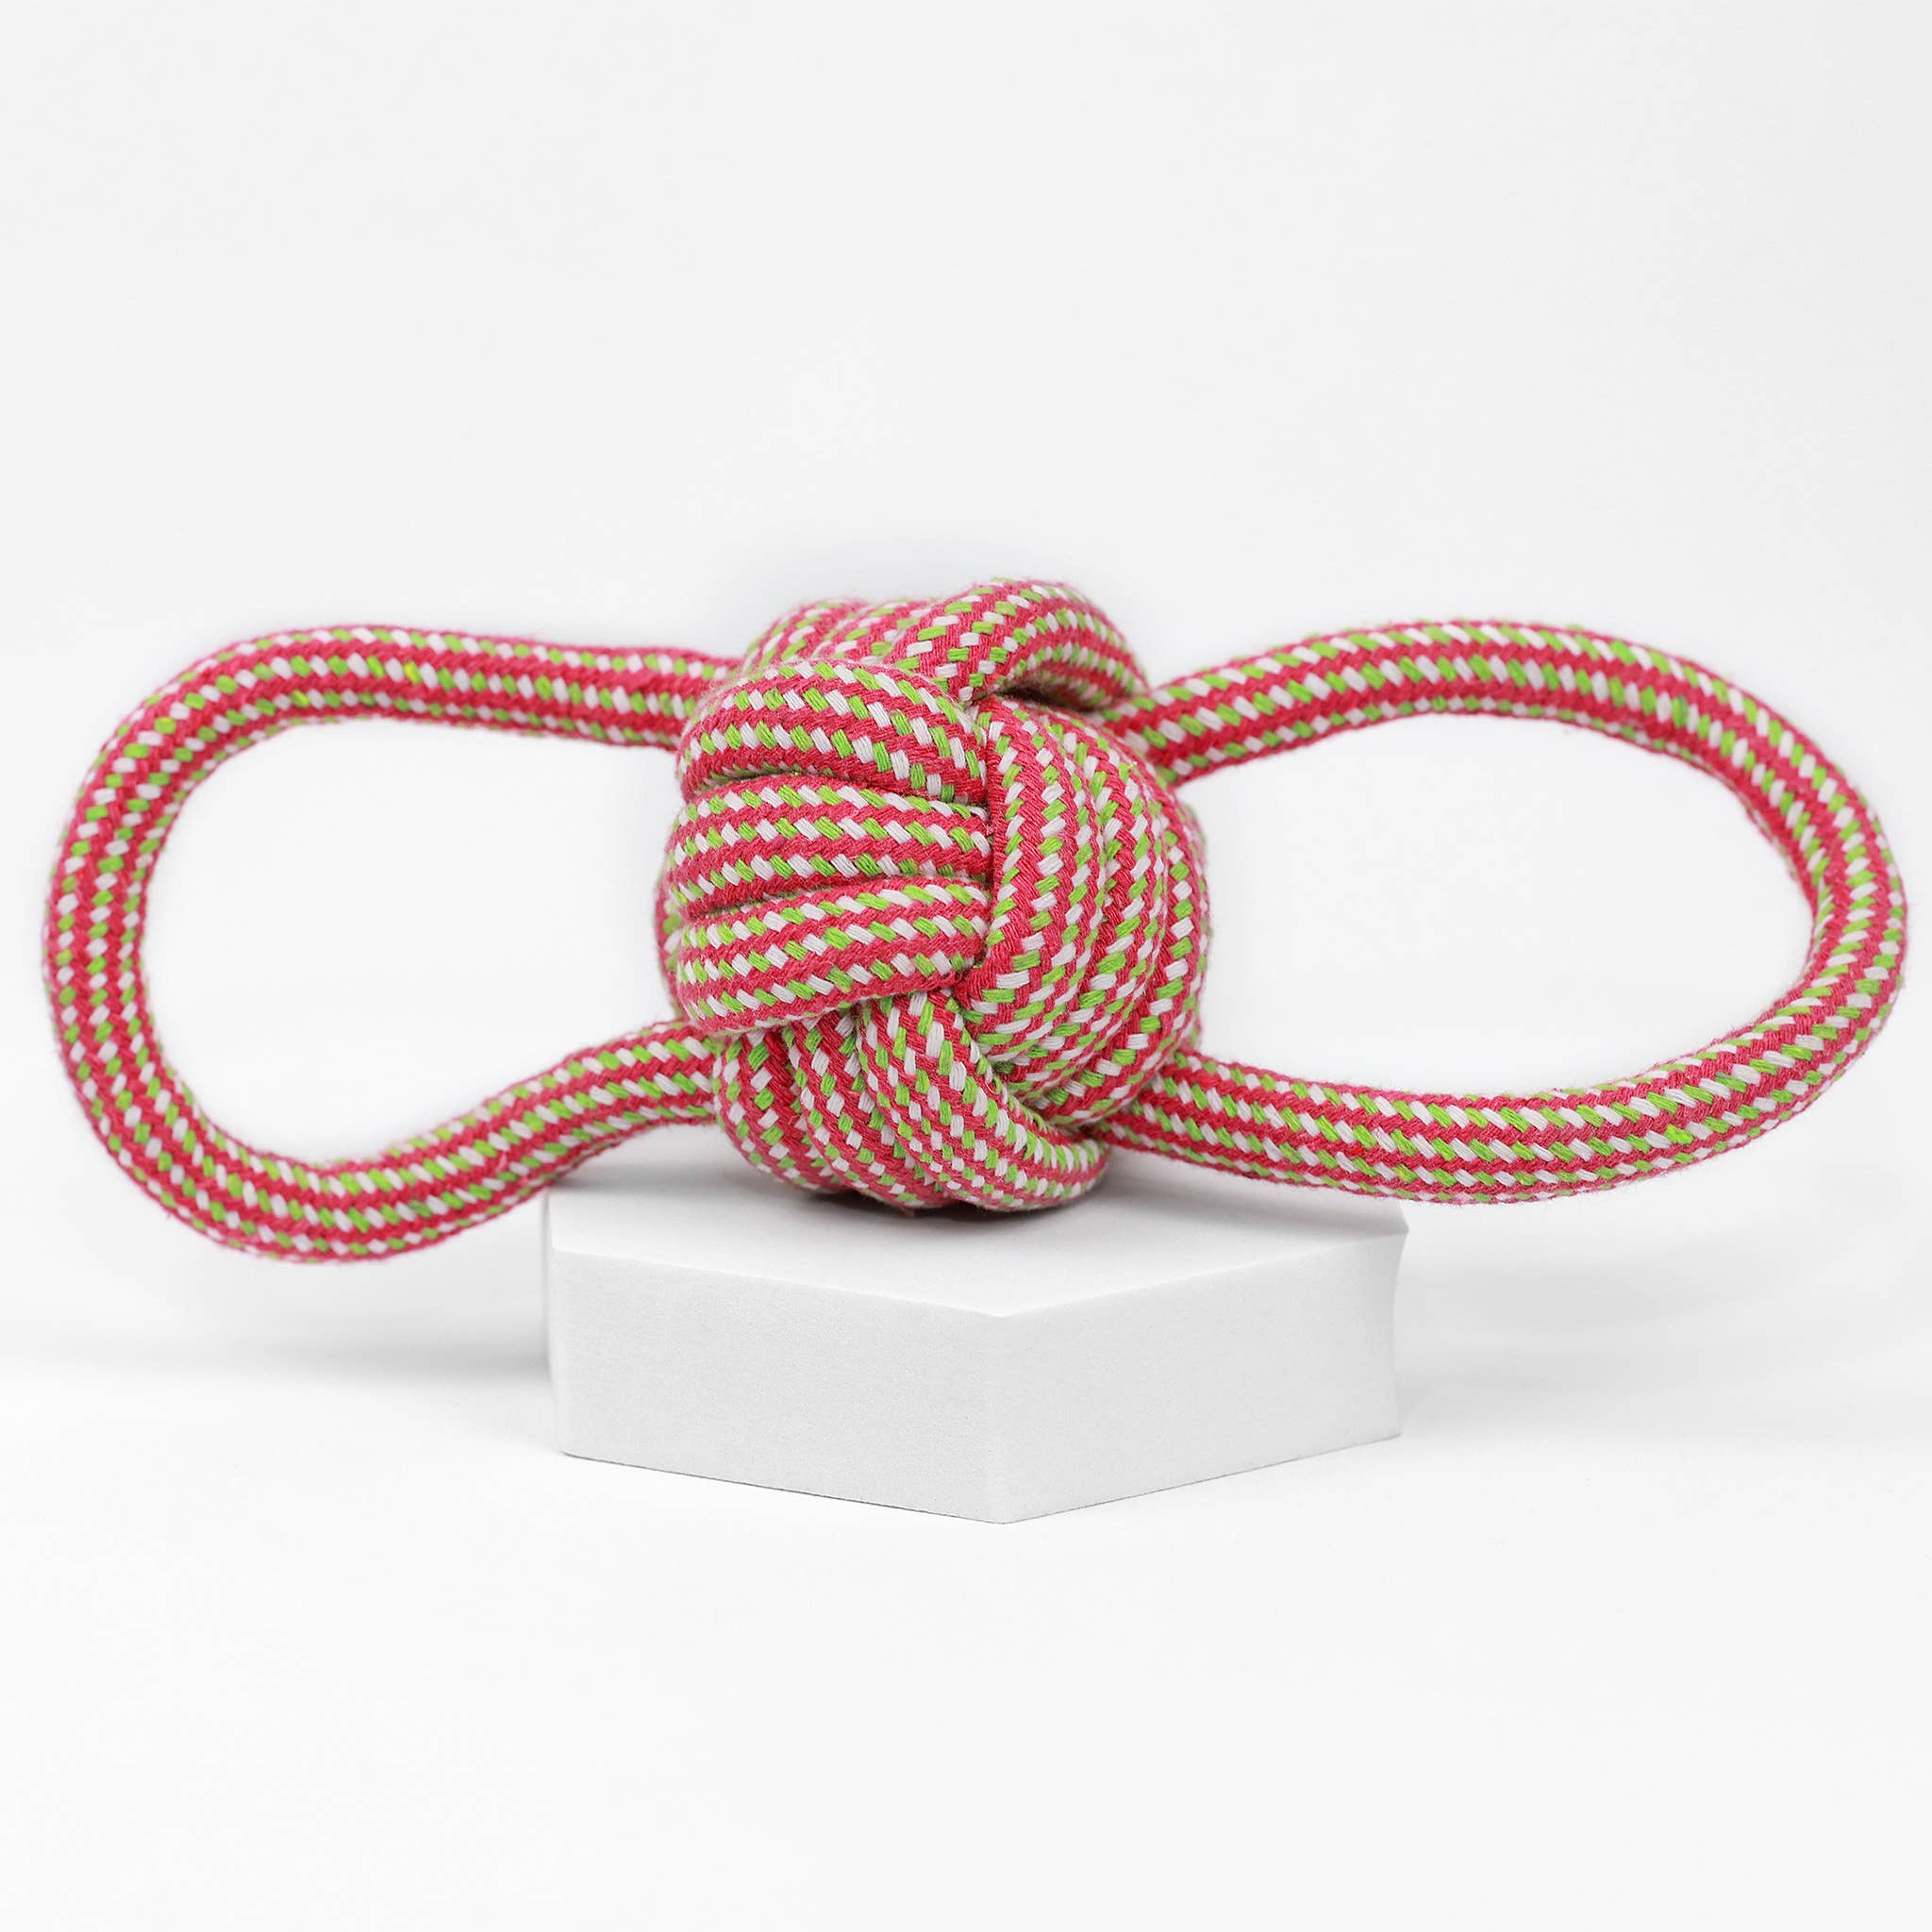 CSCORD International LLC - Pink and Green Tug Rope Toys | Handmade| Two Handles